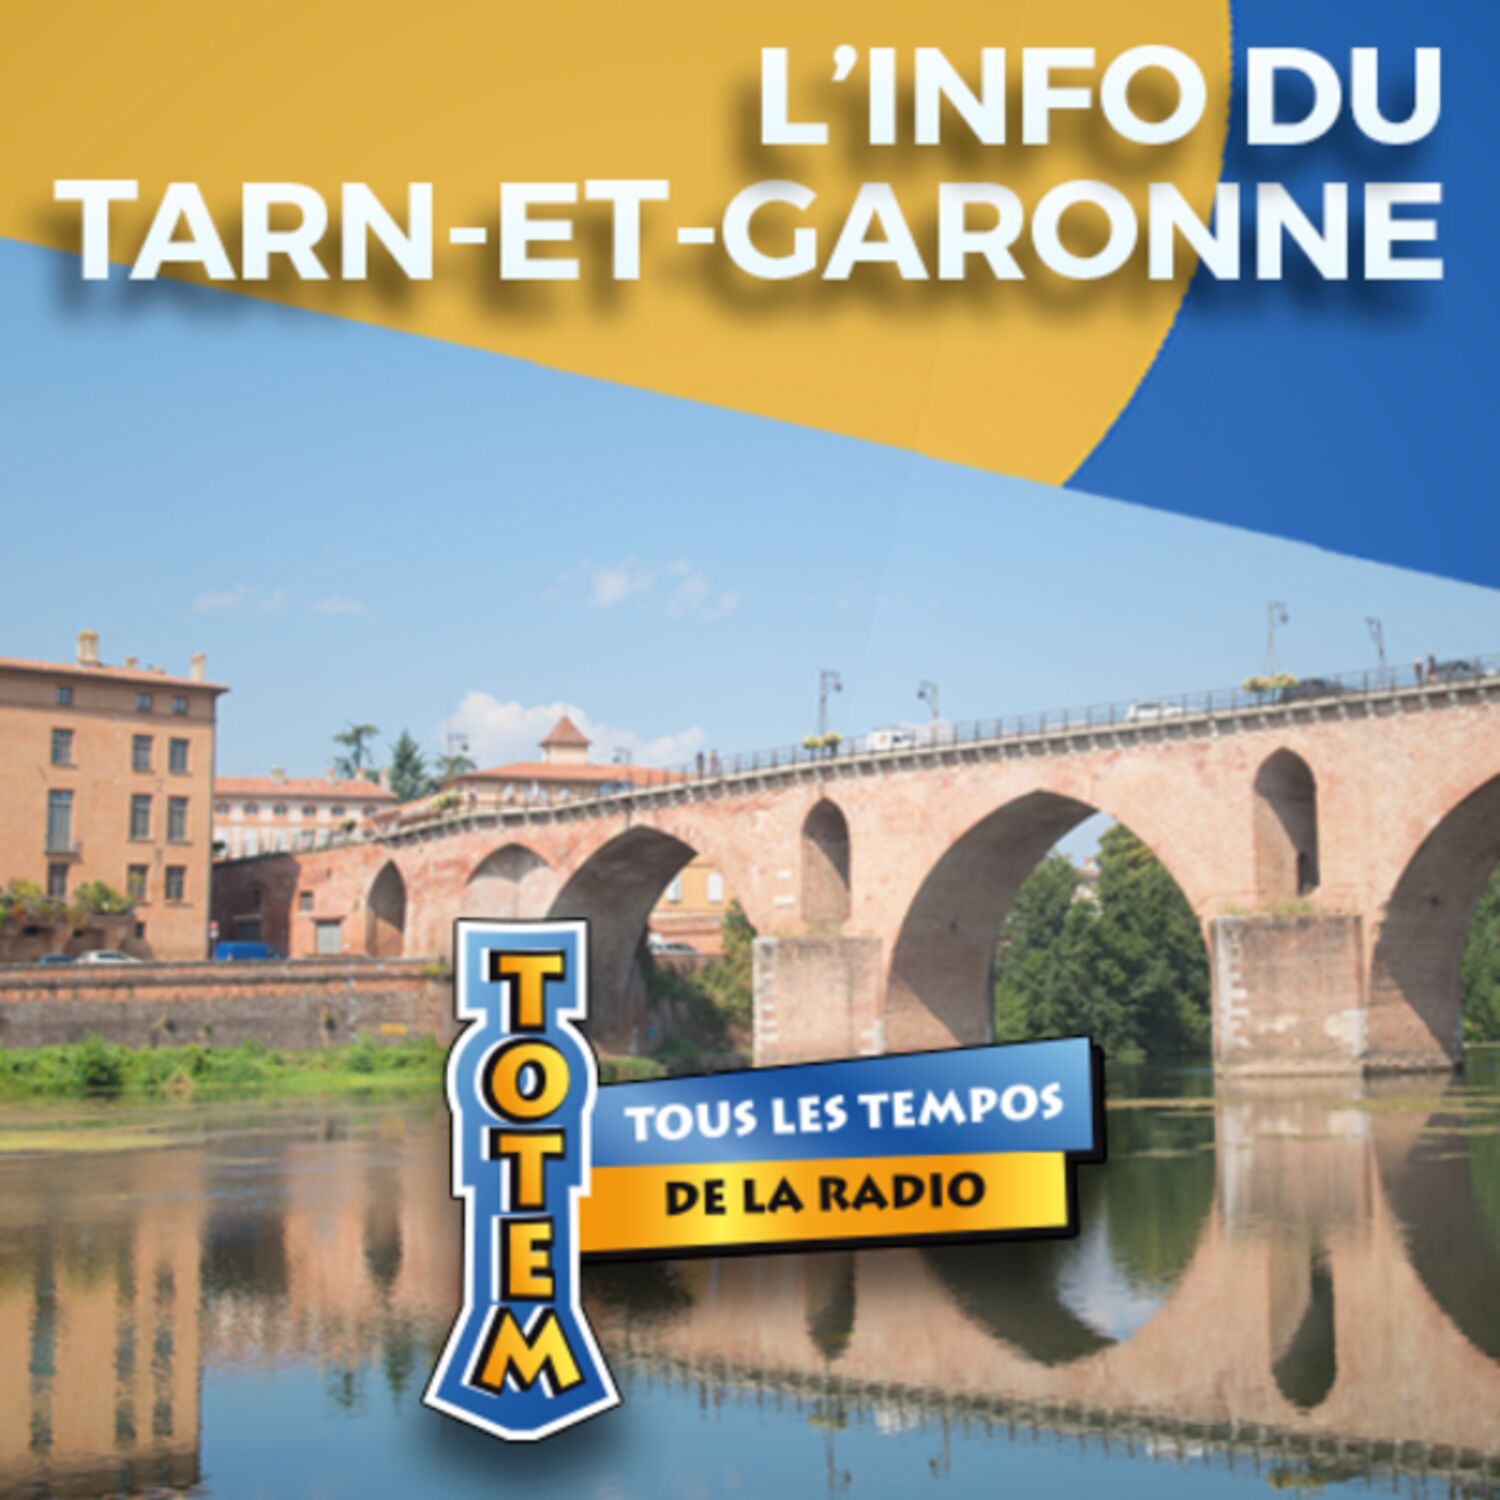 L'info du Tarn-et-Garonne du 03/04/23 à 11h59